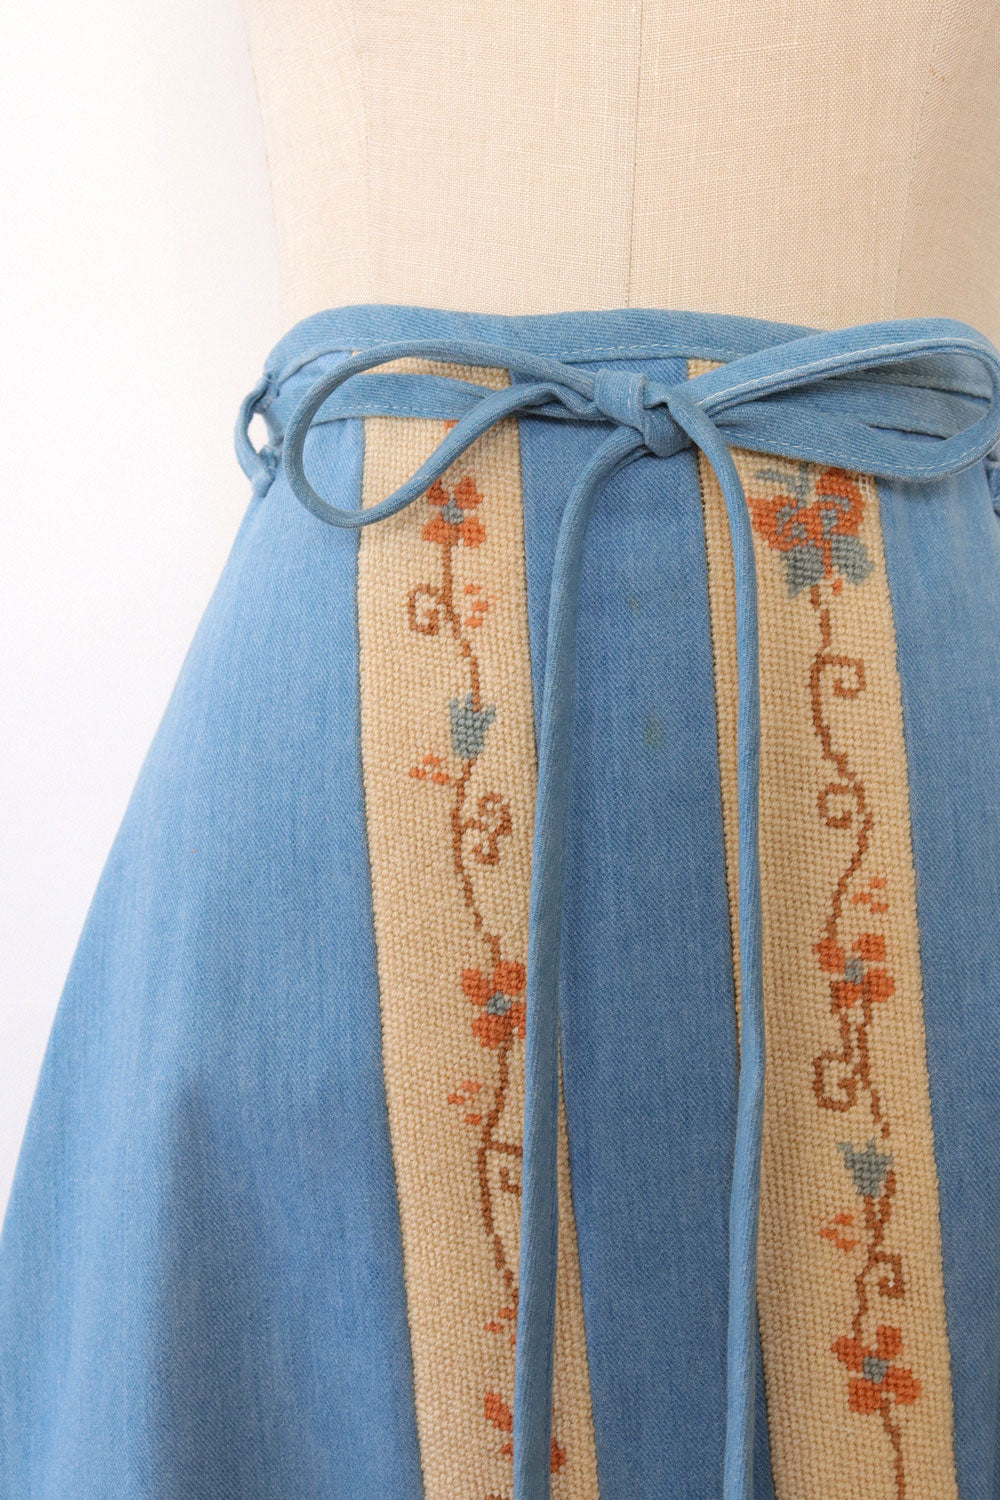 Vermont Needlepoint Denim Wrap Skirt XS-M